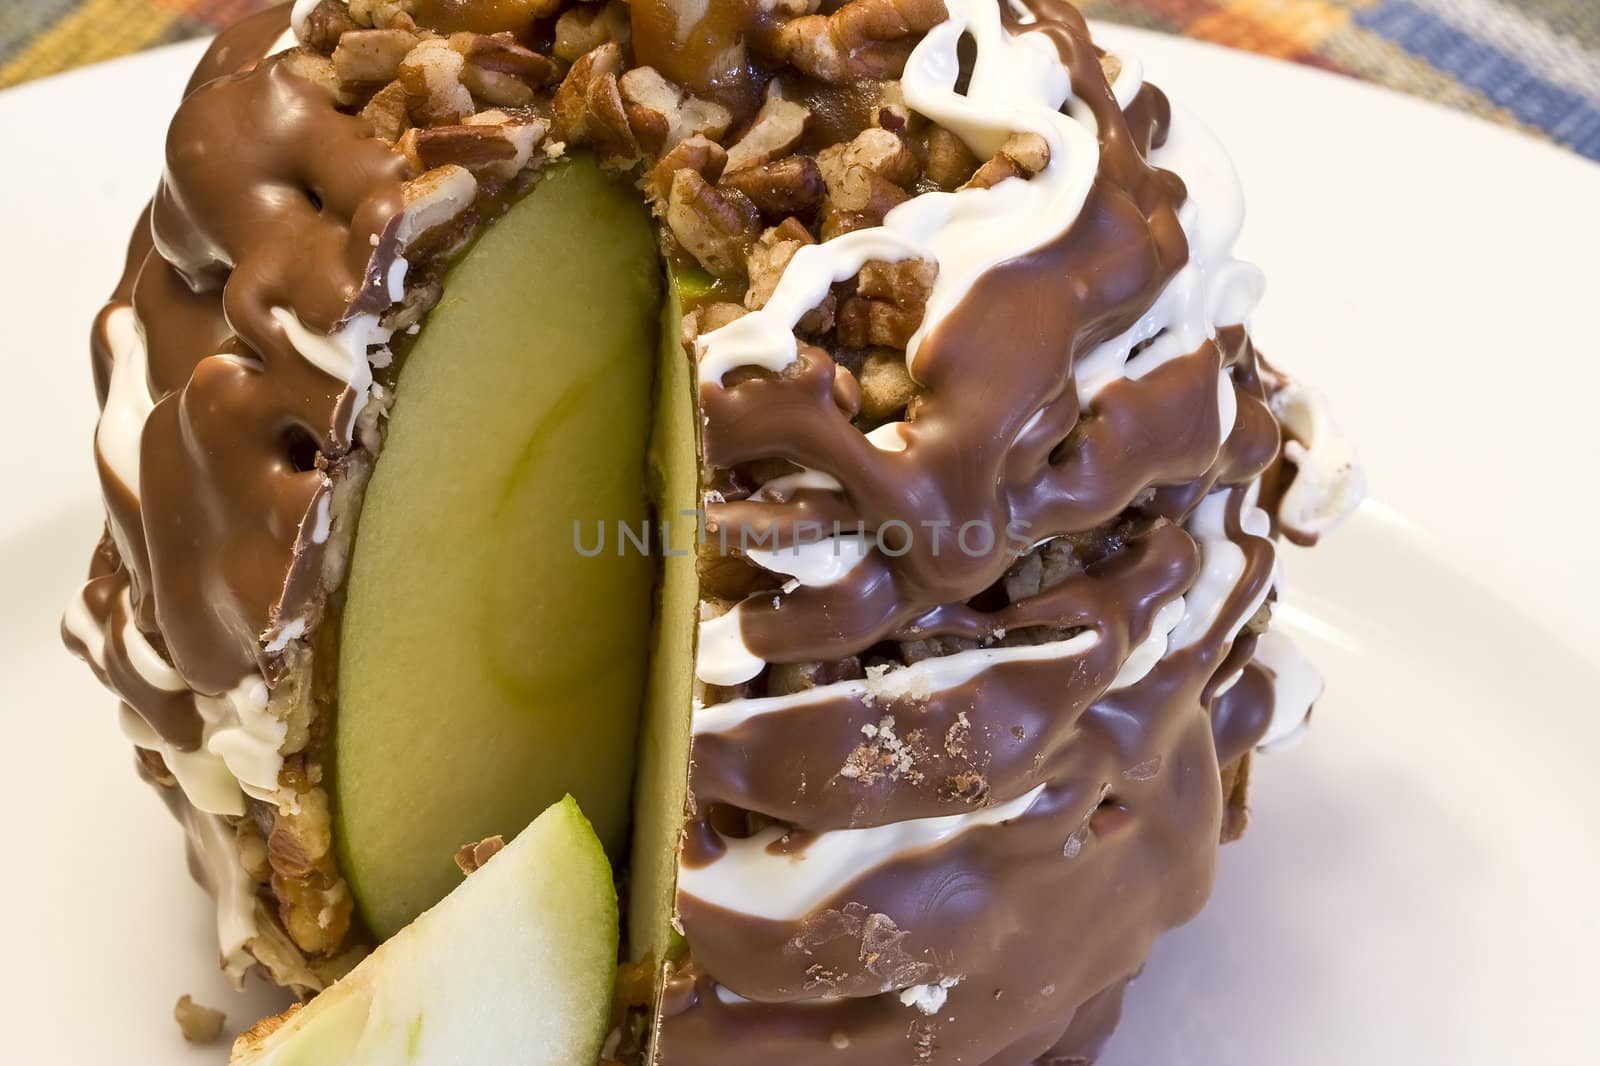 chocolate apple by snokid